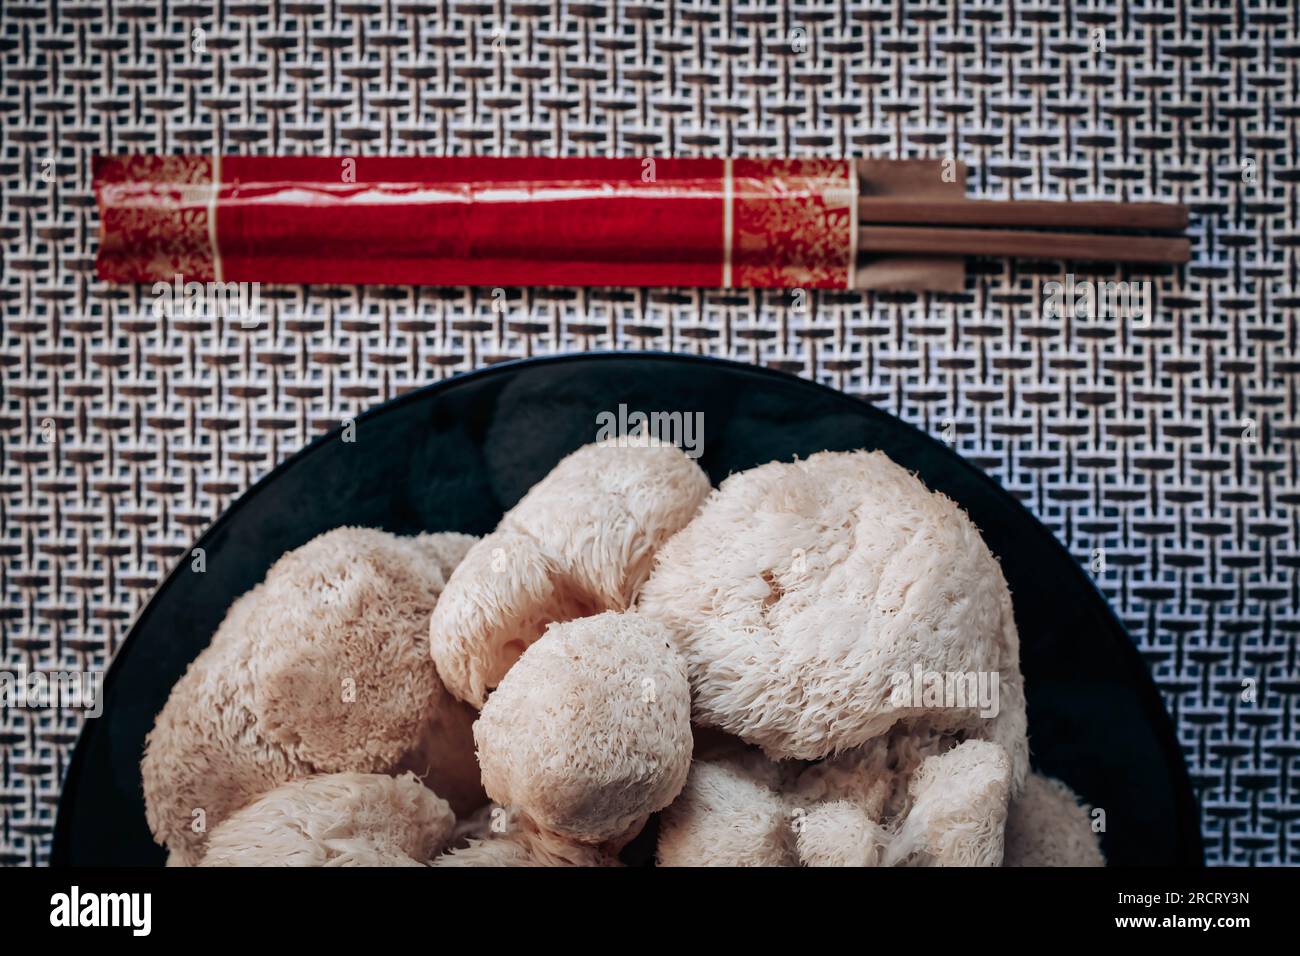 Hericium erinaceus or Lions mane mushroom with a Chinese chopsticks. Medical mushroom concept Stock Photo